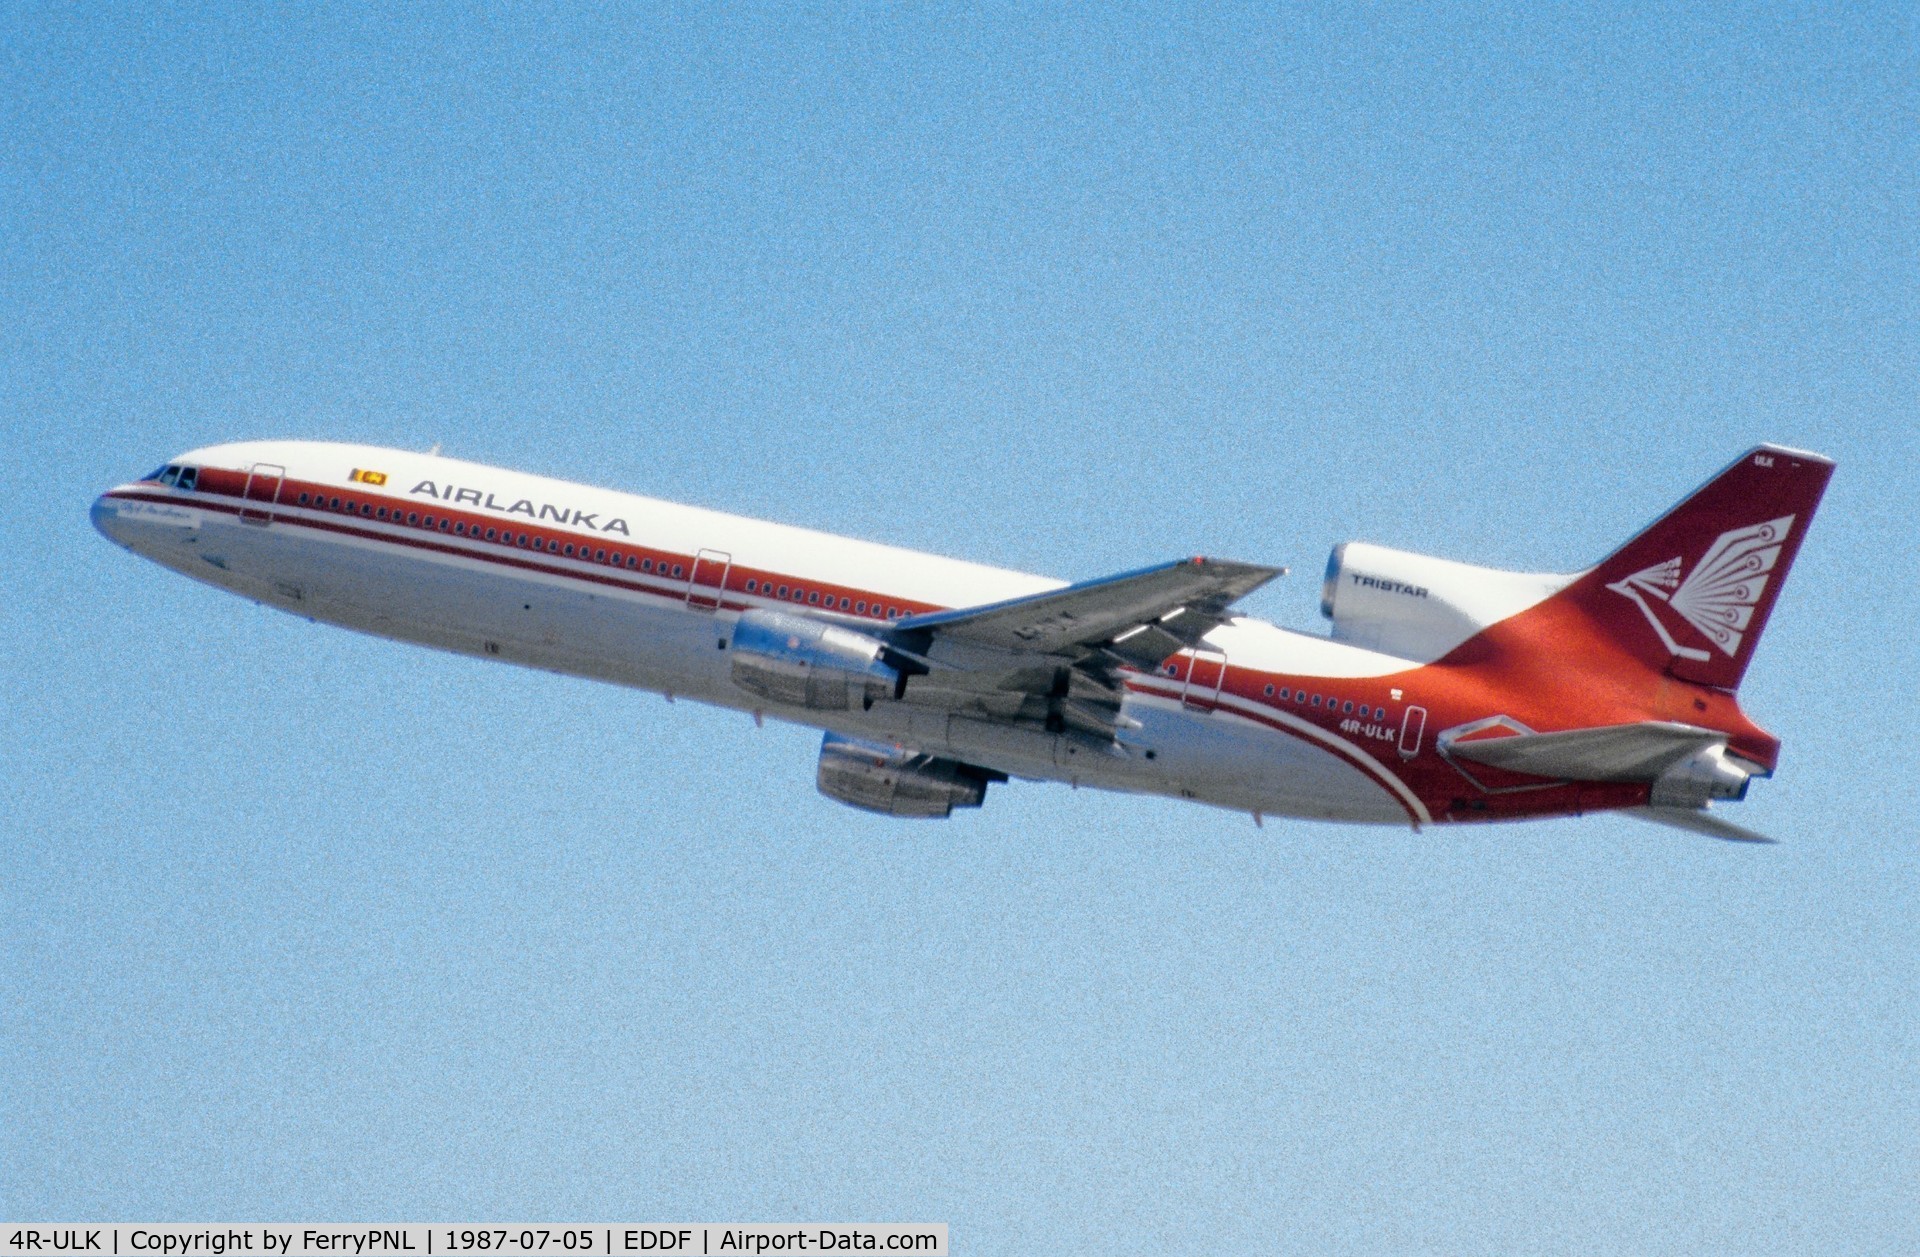 4R-ULK, 1973 Lockheed L-1011-385-1 TriStar 1 C/N 193E-1027, Air Lanka L1011 taking-off